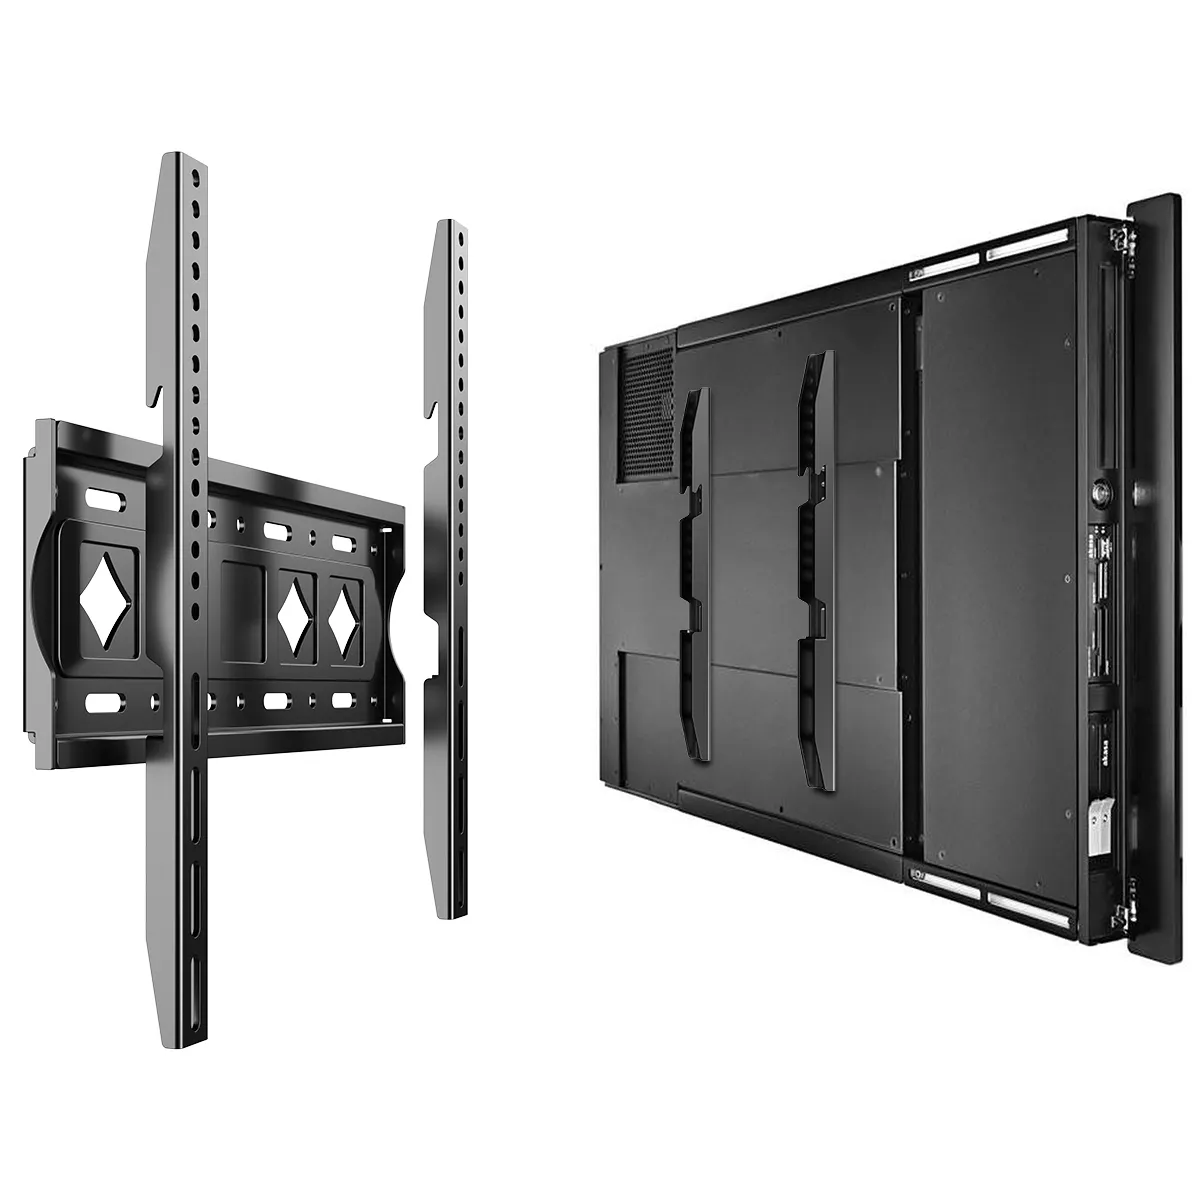 Pemasok kualitas tinggi LCD LED braket TV dudukan dinding untuk televisi Universal layar datar Plasma 26-65 inci